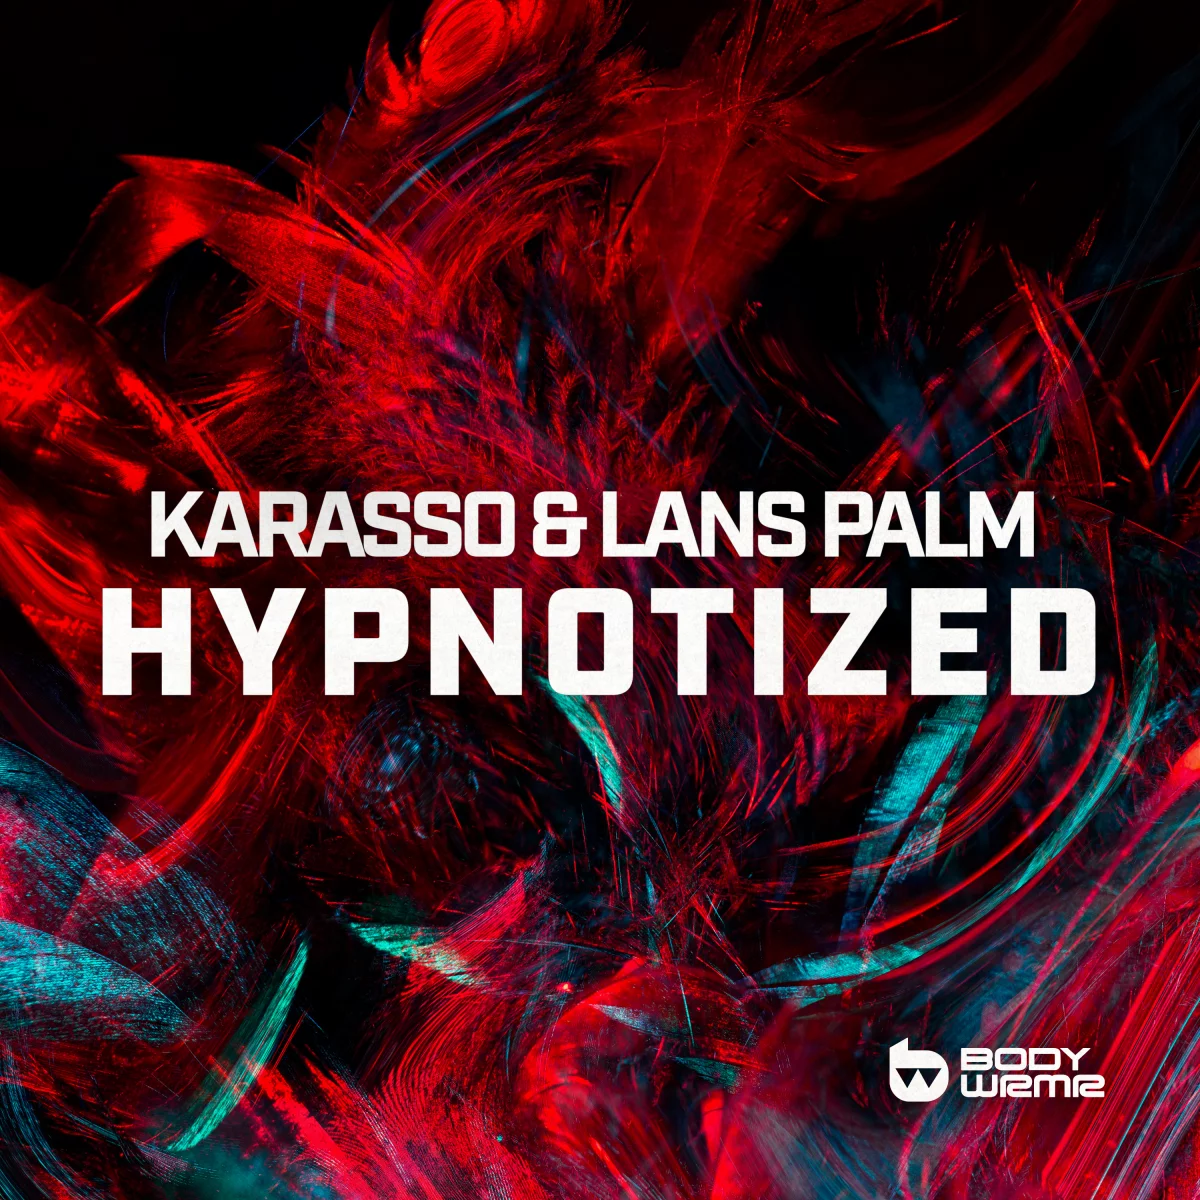 Hypnotized - Karasso⁠ & Lans Palm⁠